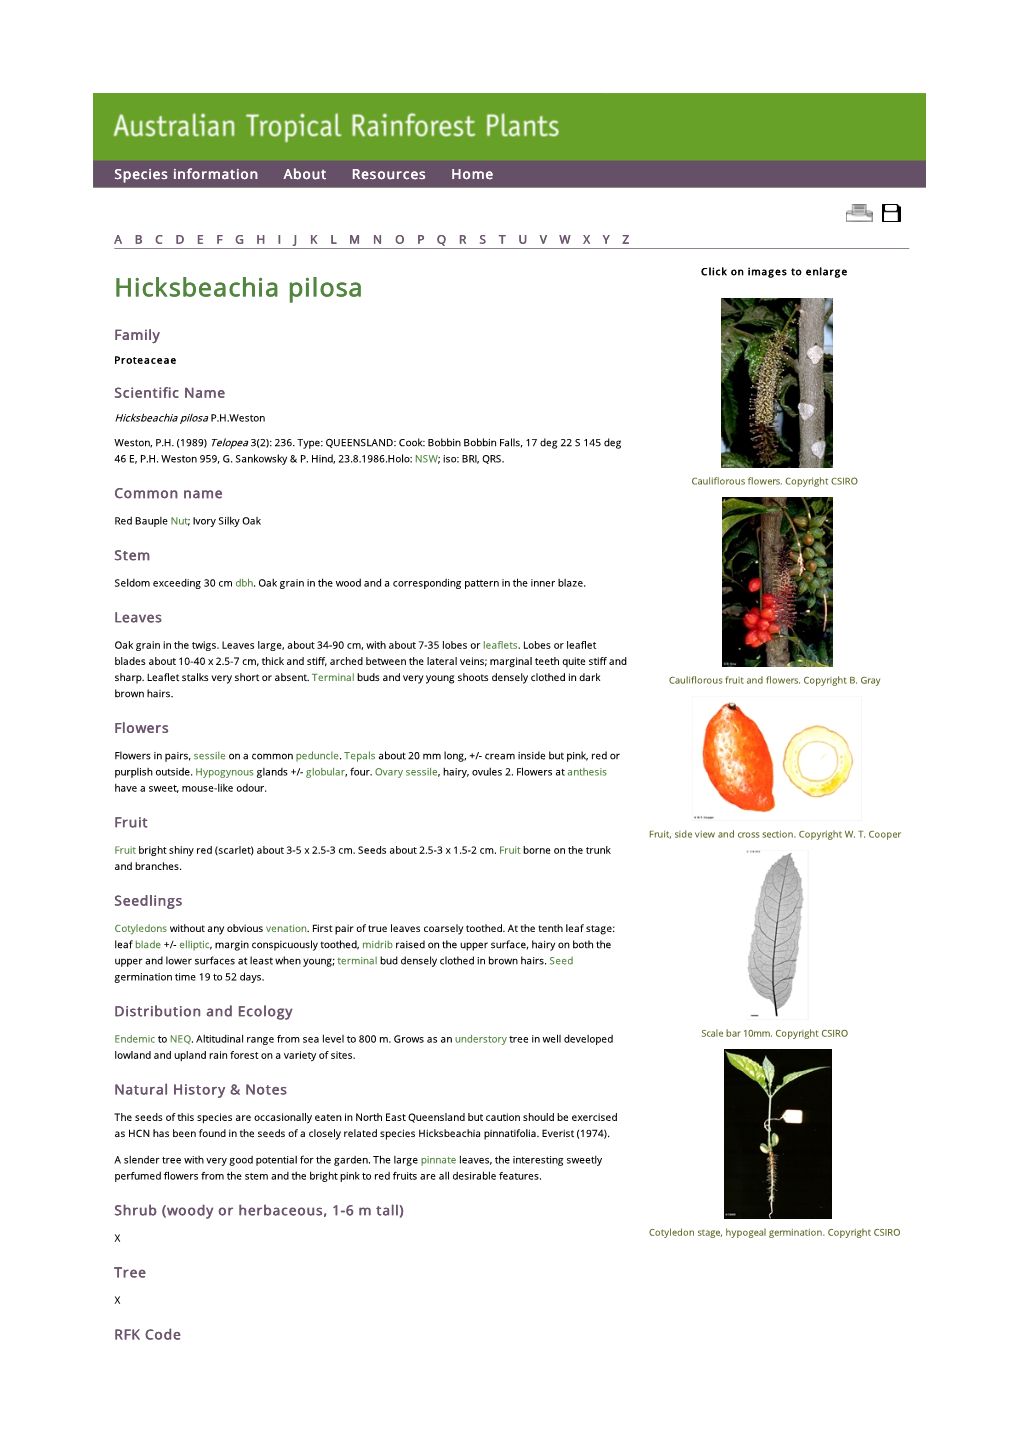 Hicksbeachia Pilosa Click on Images to Enlarge